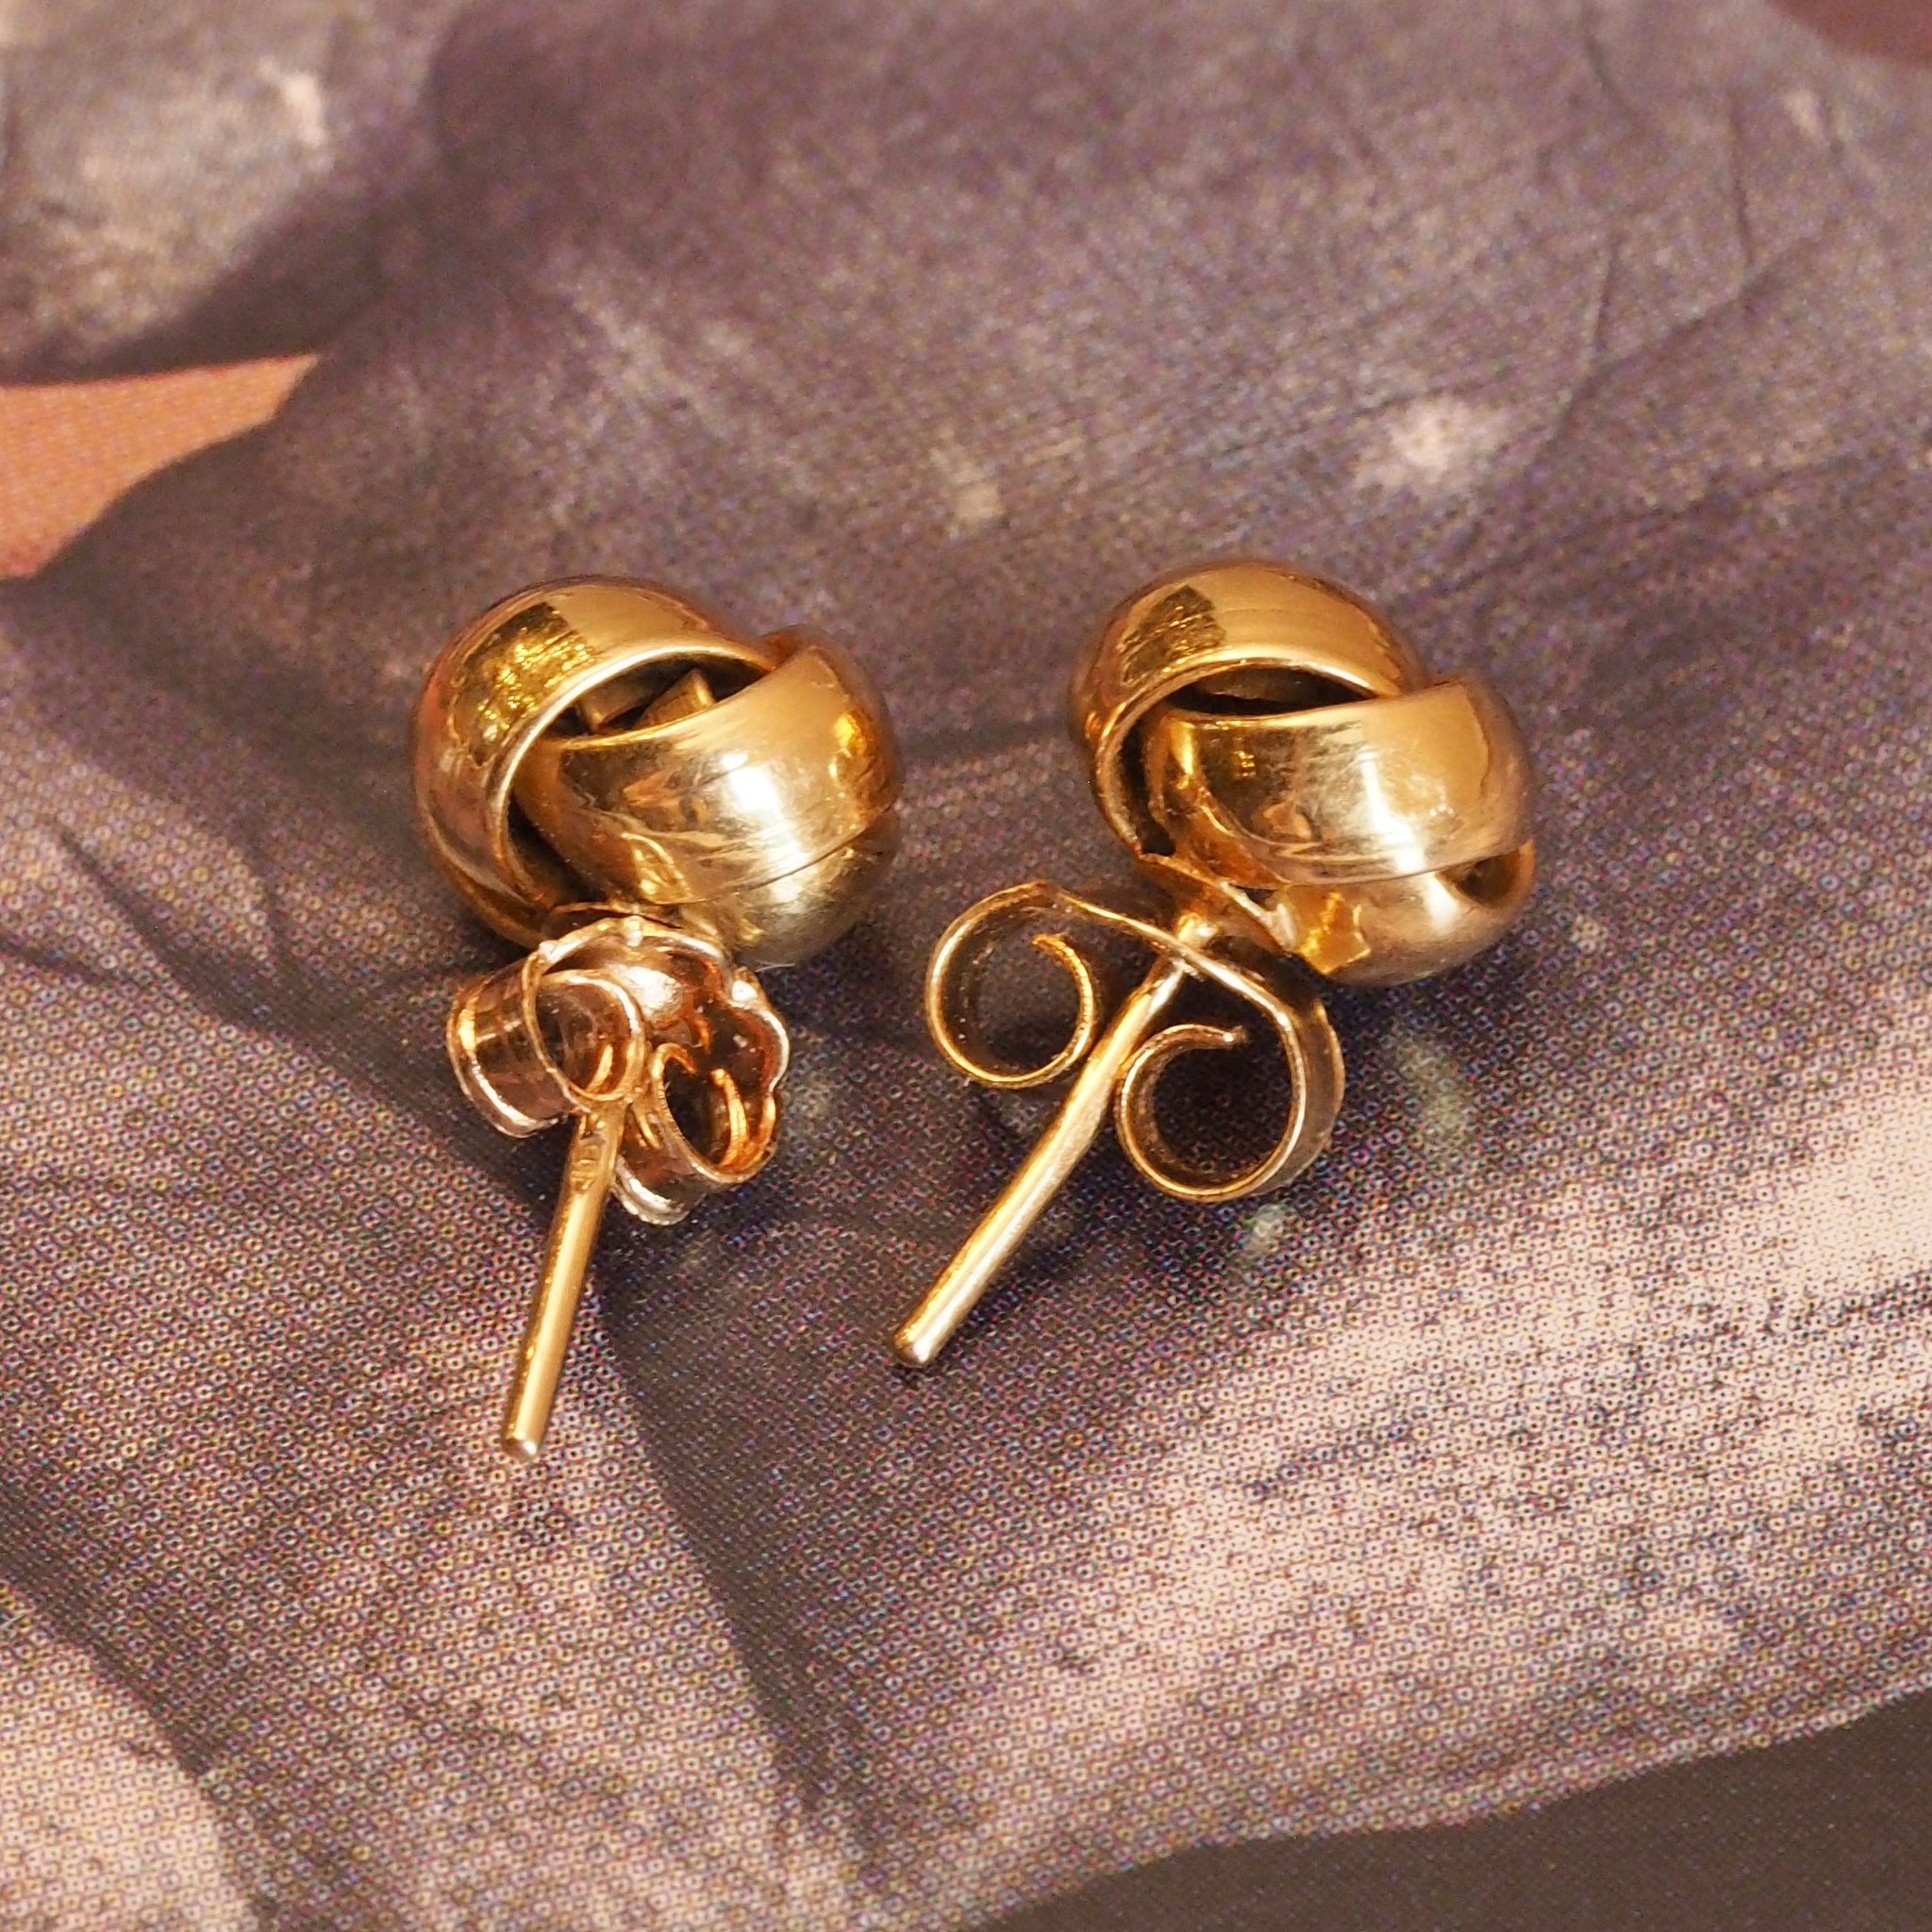 Vintage Portuguese 19k Gold Knot Earrings